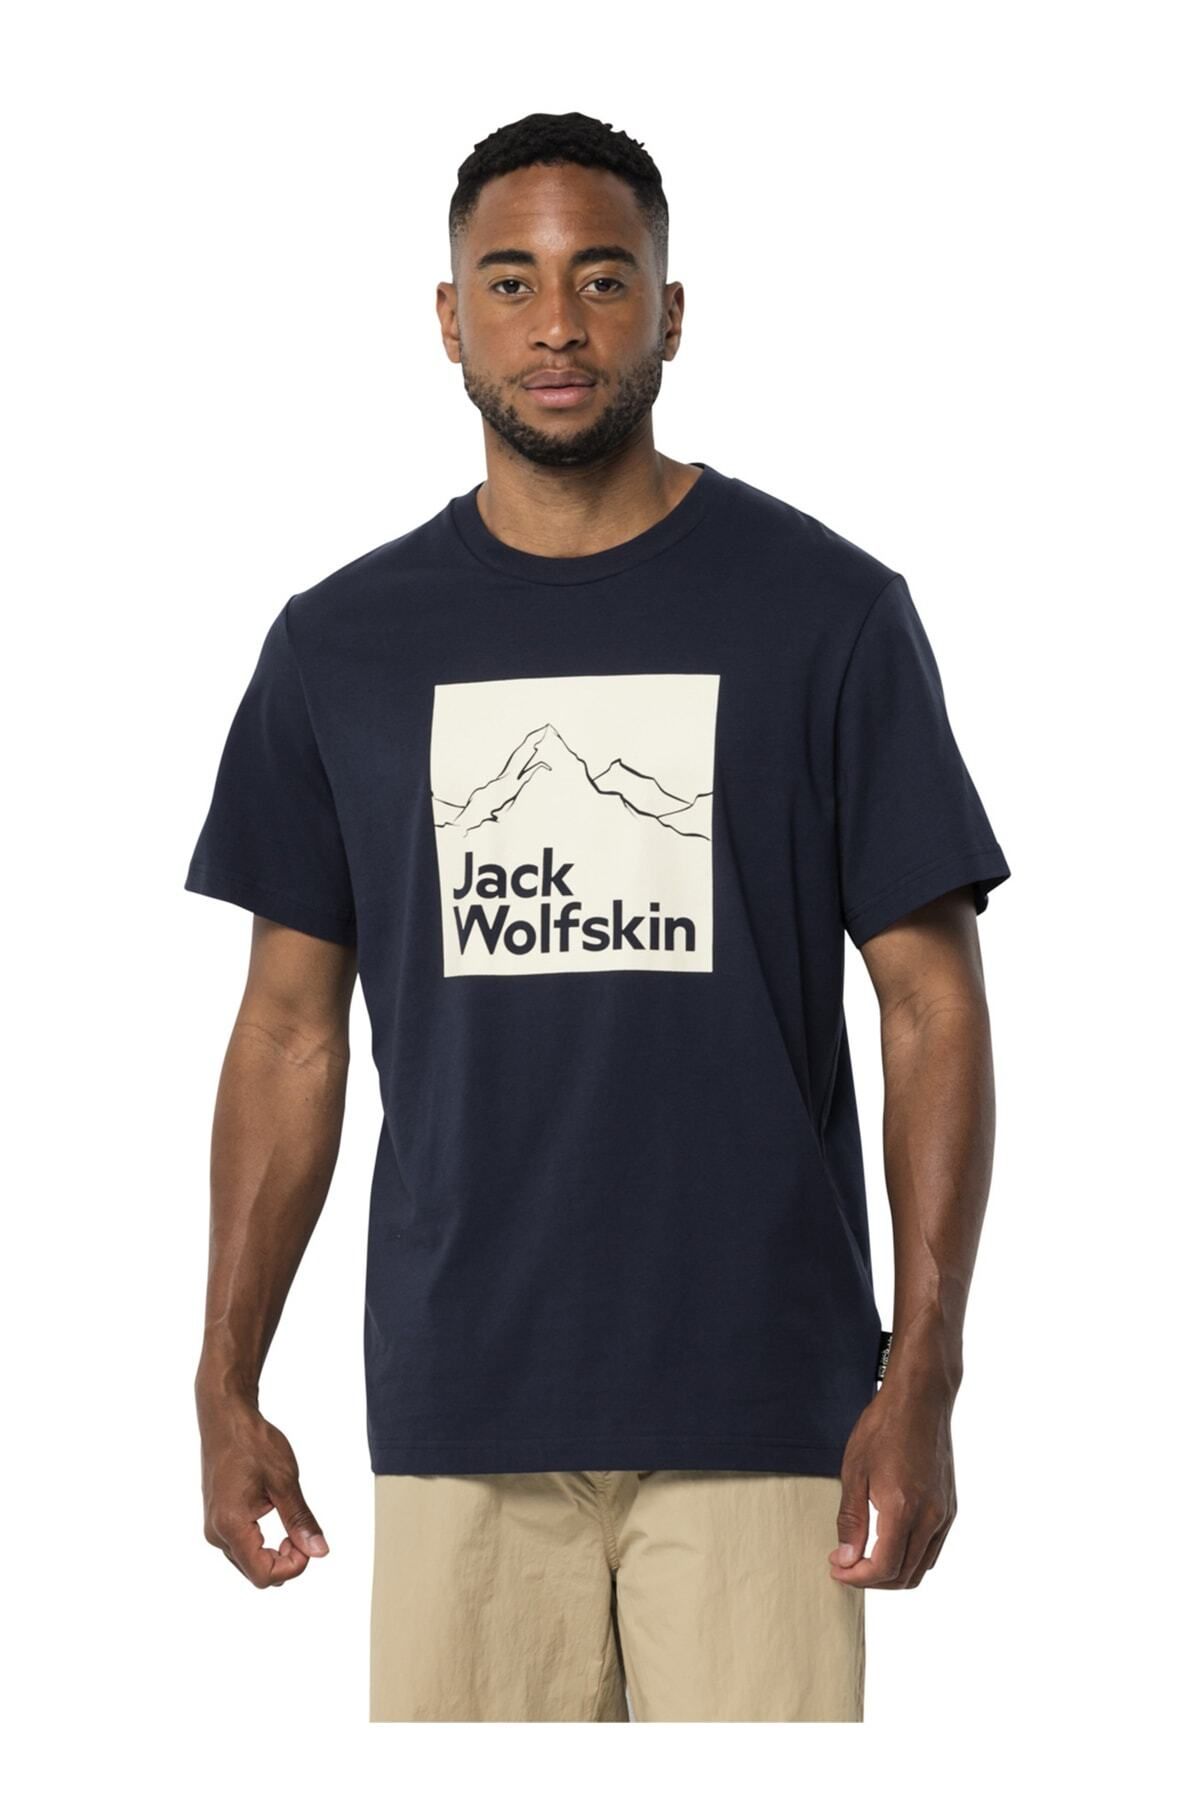 Jack Wolfskin Bisiklet Yaka Baskılı Lacivert Erkek T-shirt 1809021_1010 Brand T M